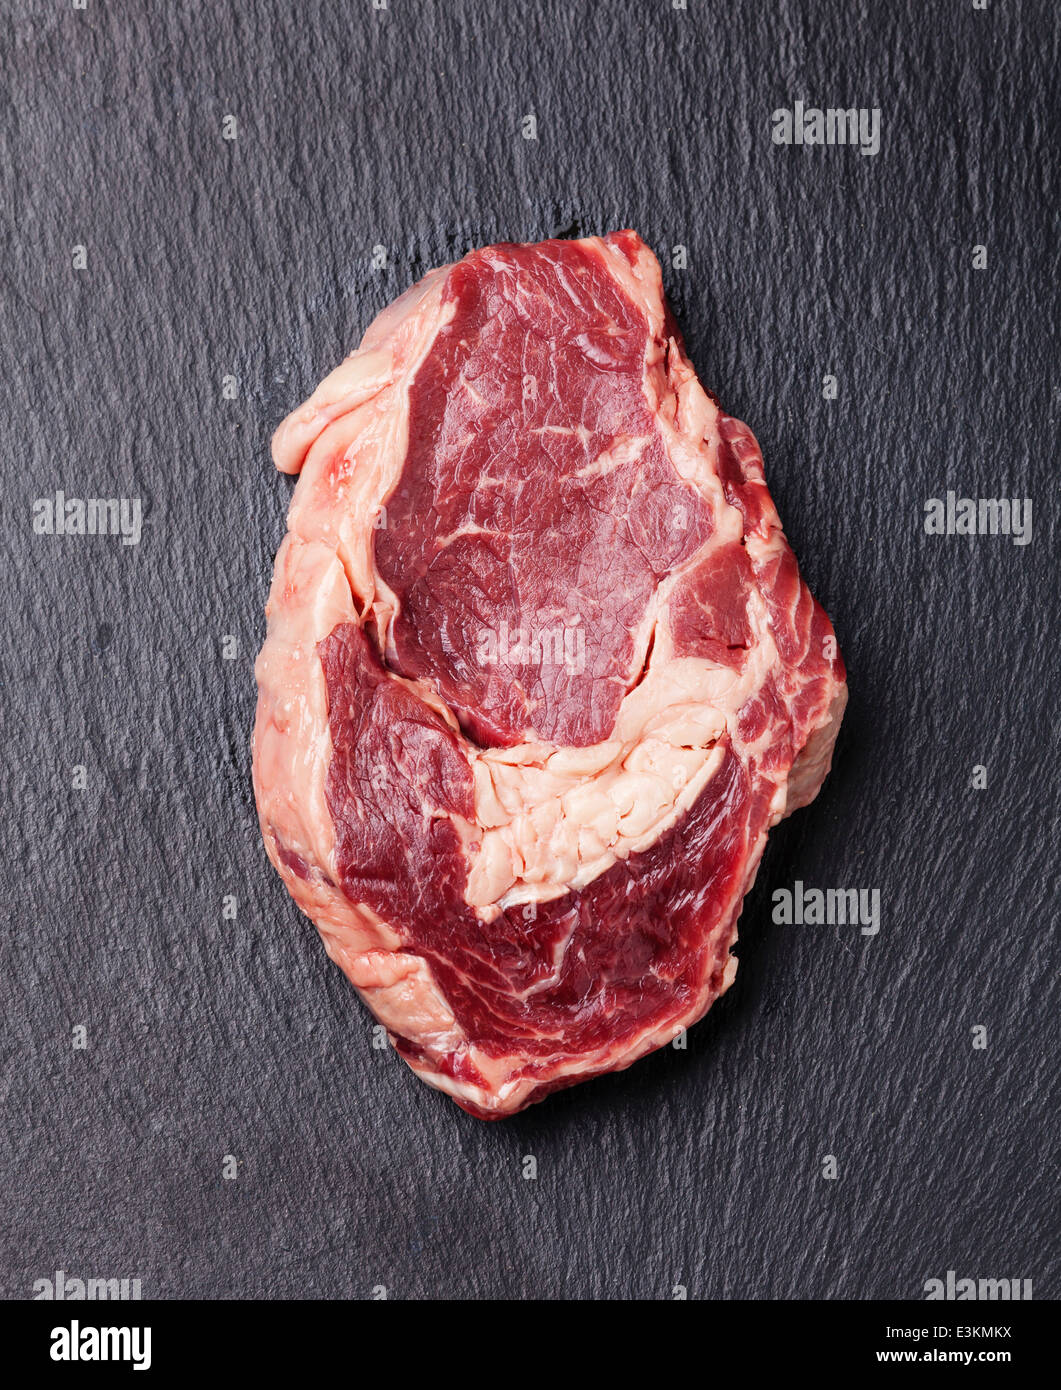 Carne fresca cruda sobre fondo oscuro Foto de stock